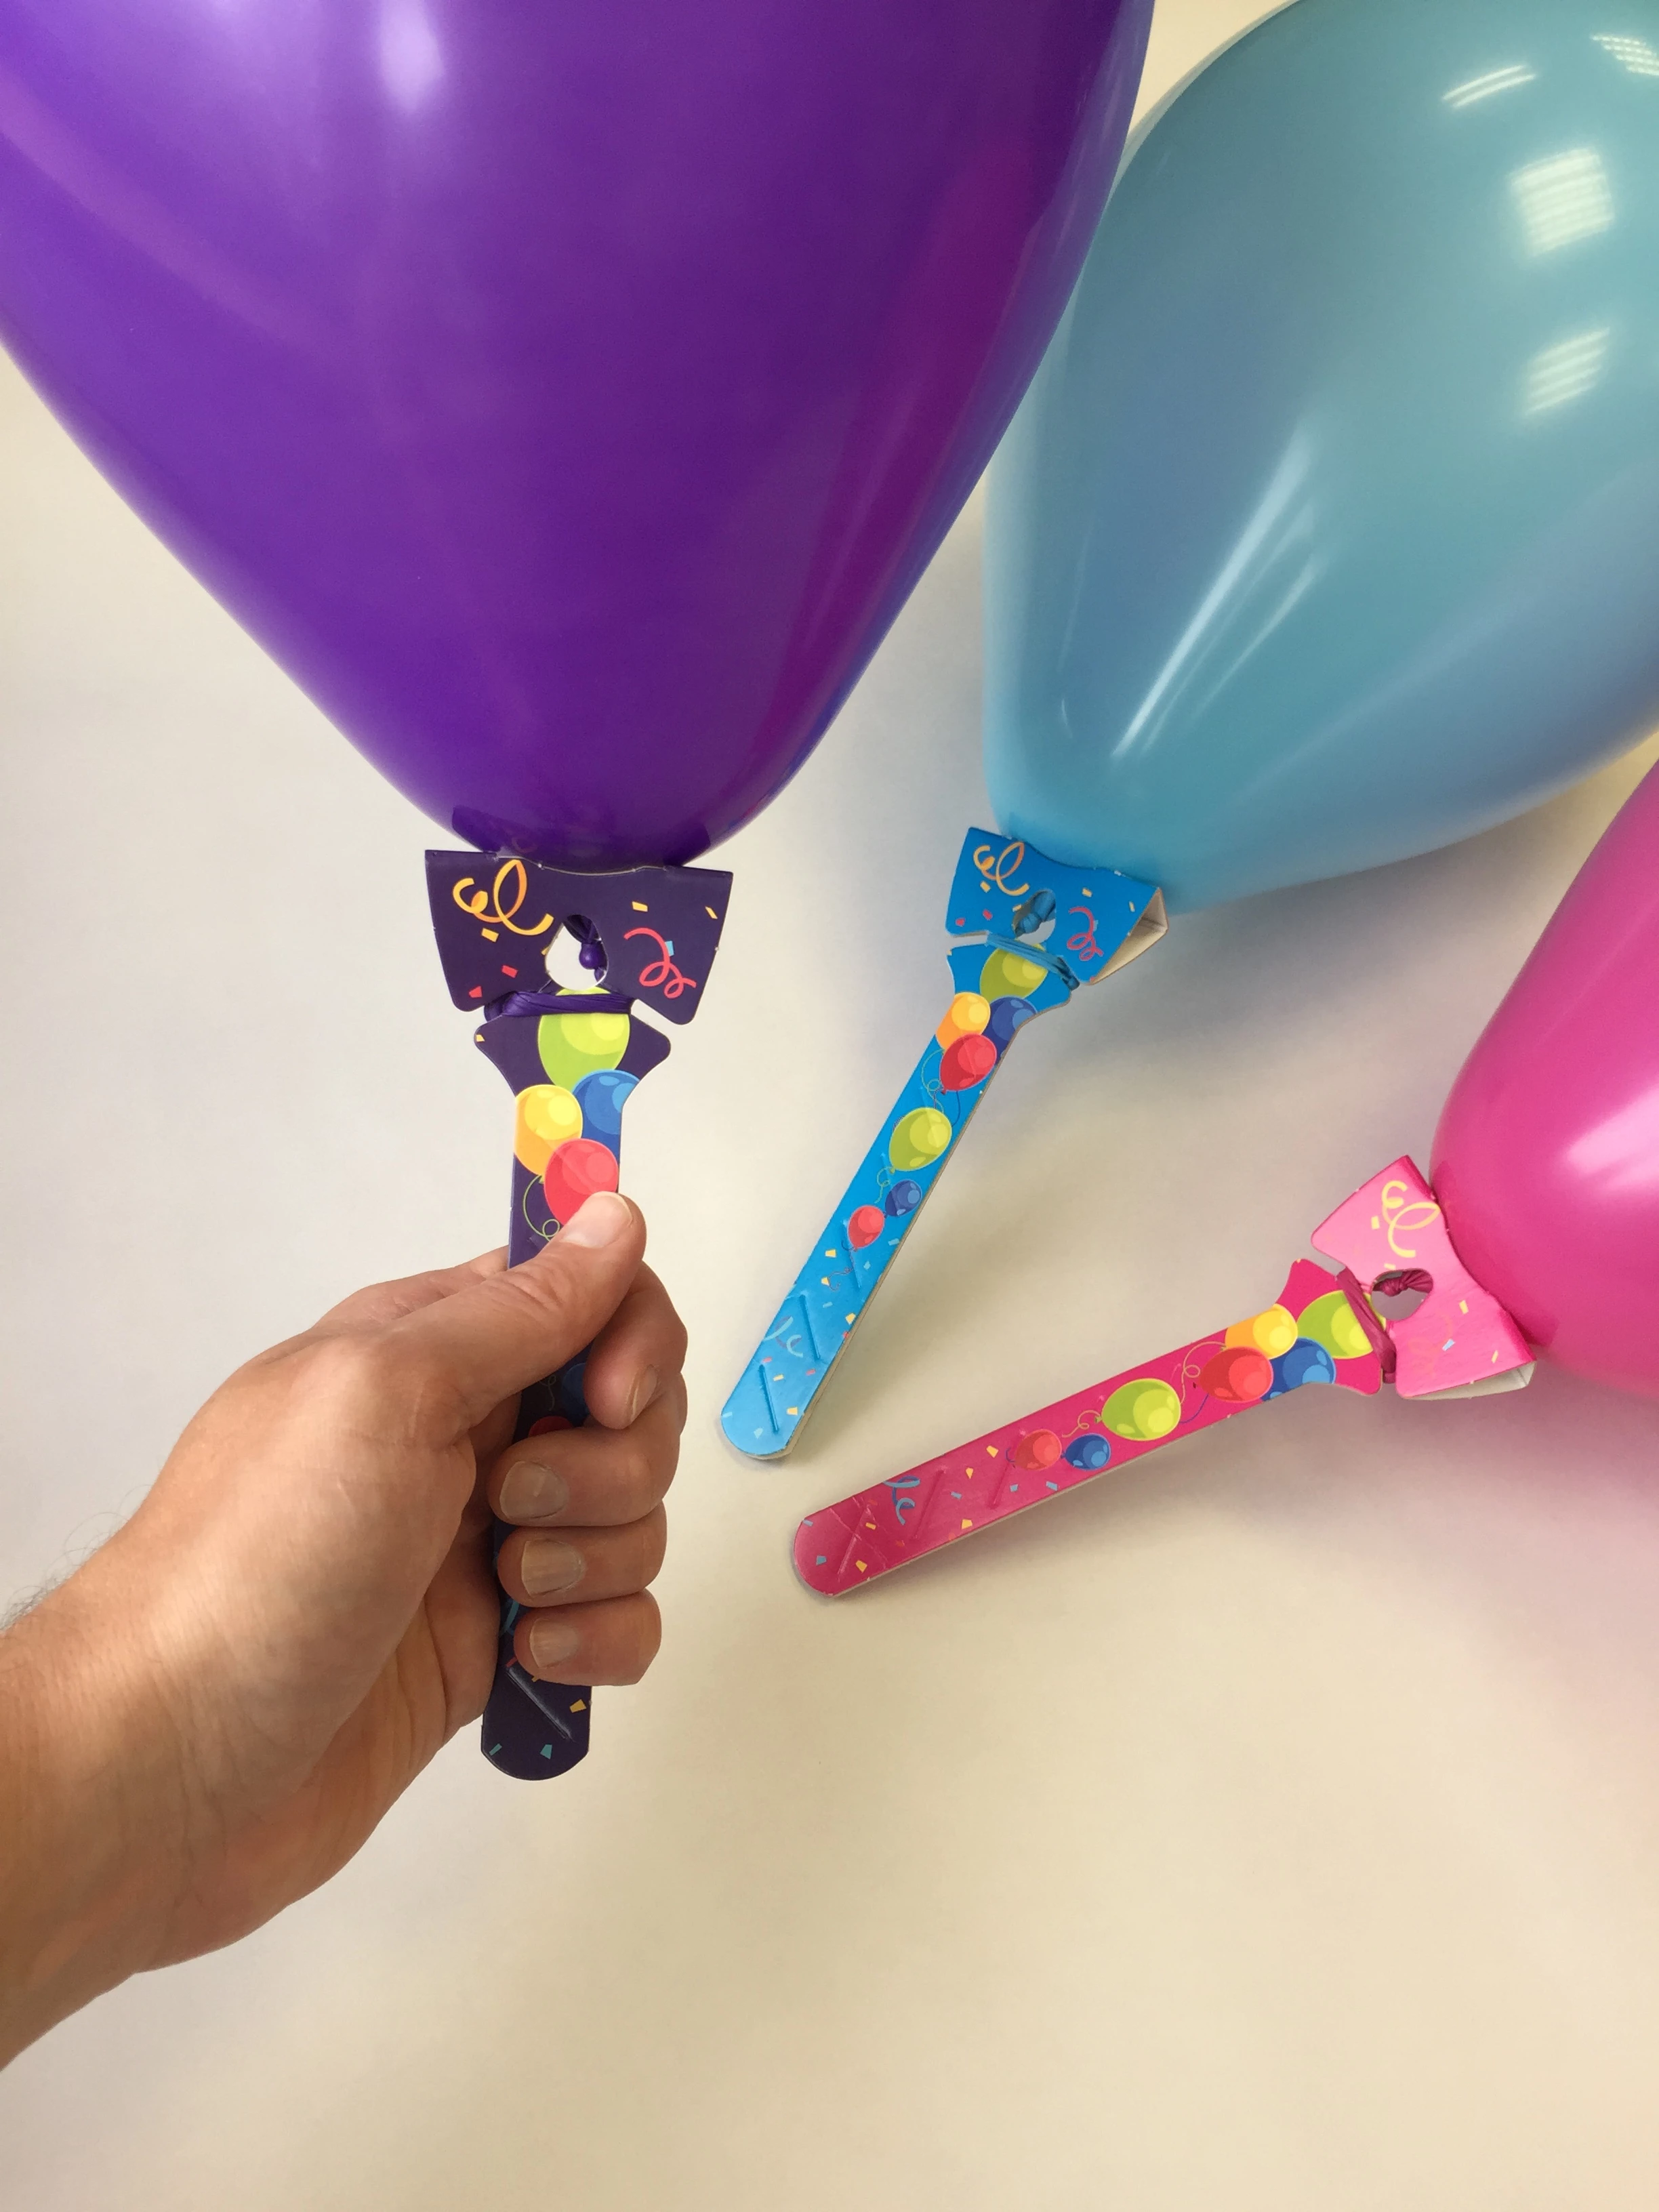 B -Loony’s innovative cardboard balloon stick